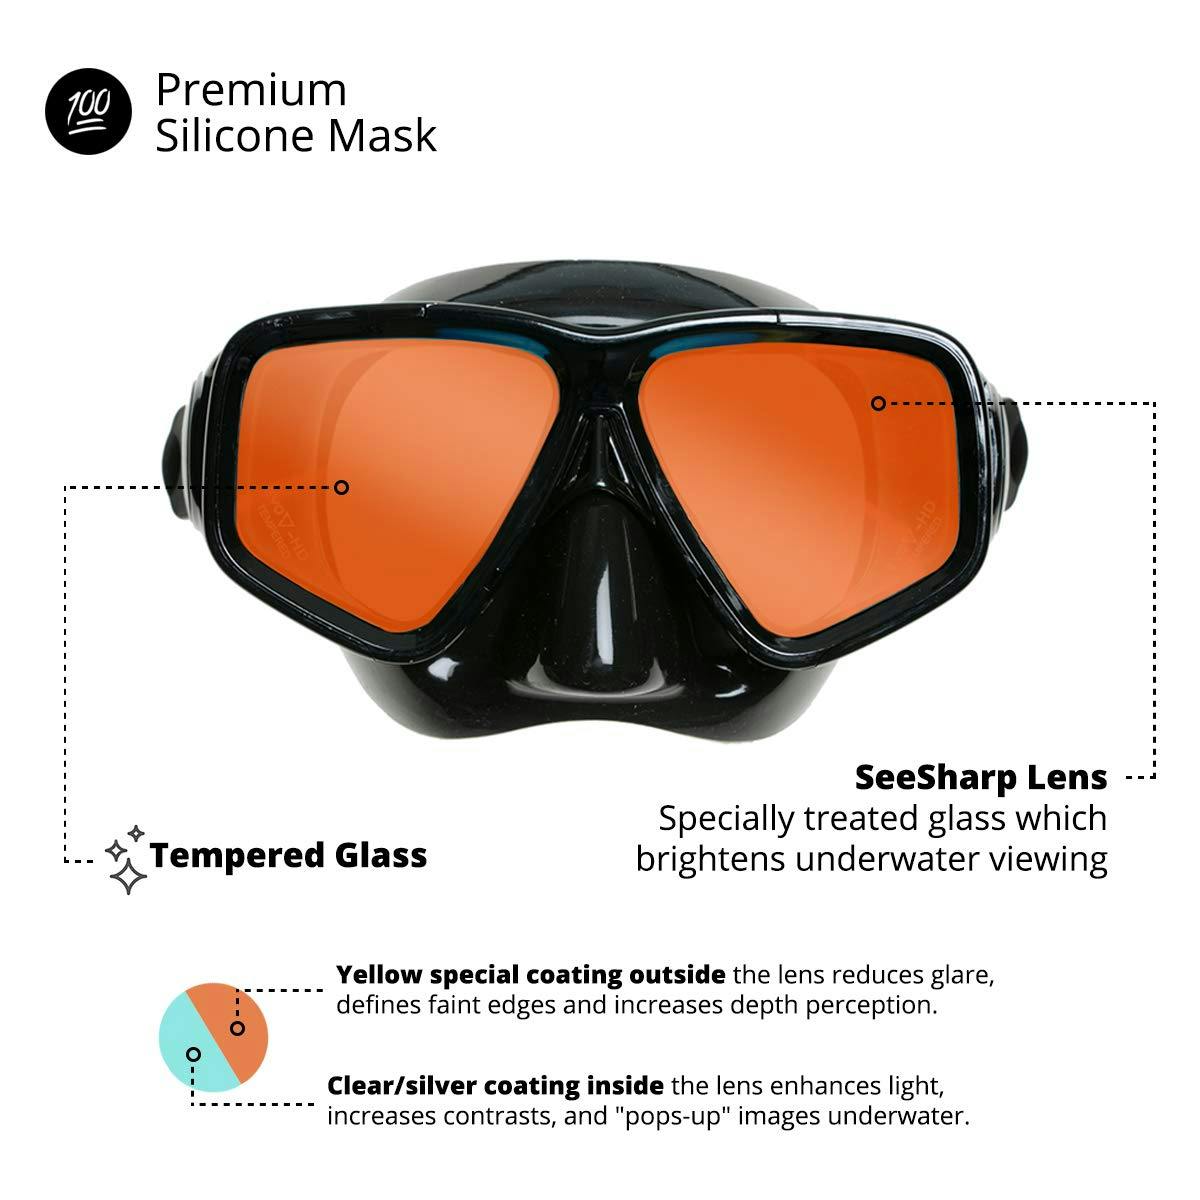 EVO Hi Definition Snorkel Combo, Dual Lens Mask Infographic